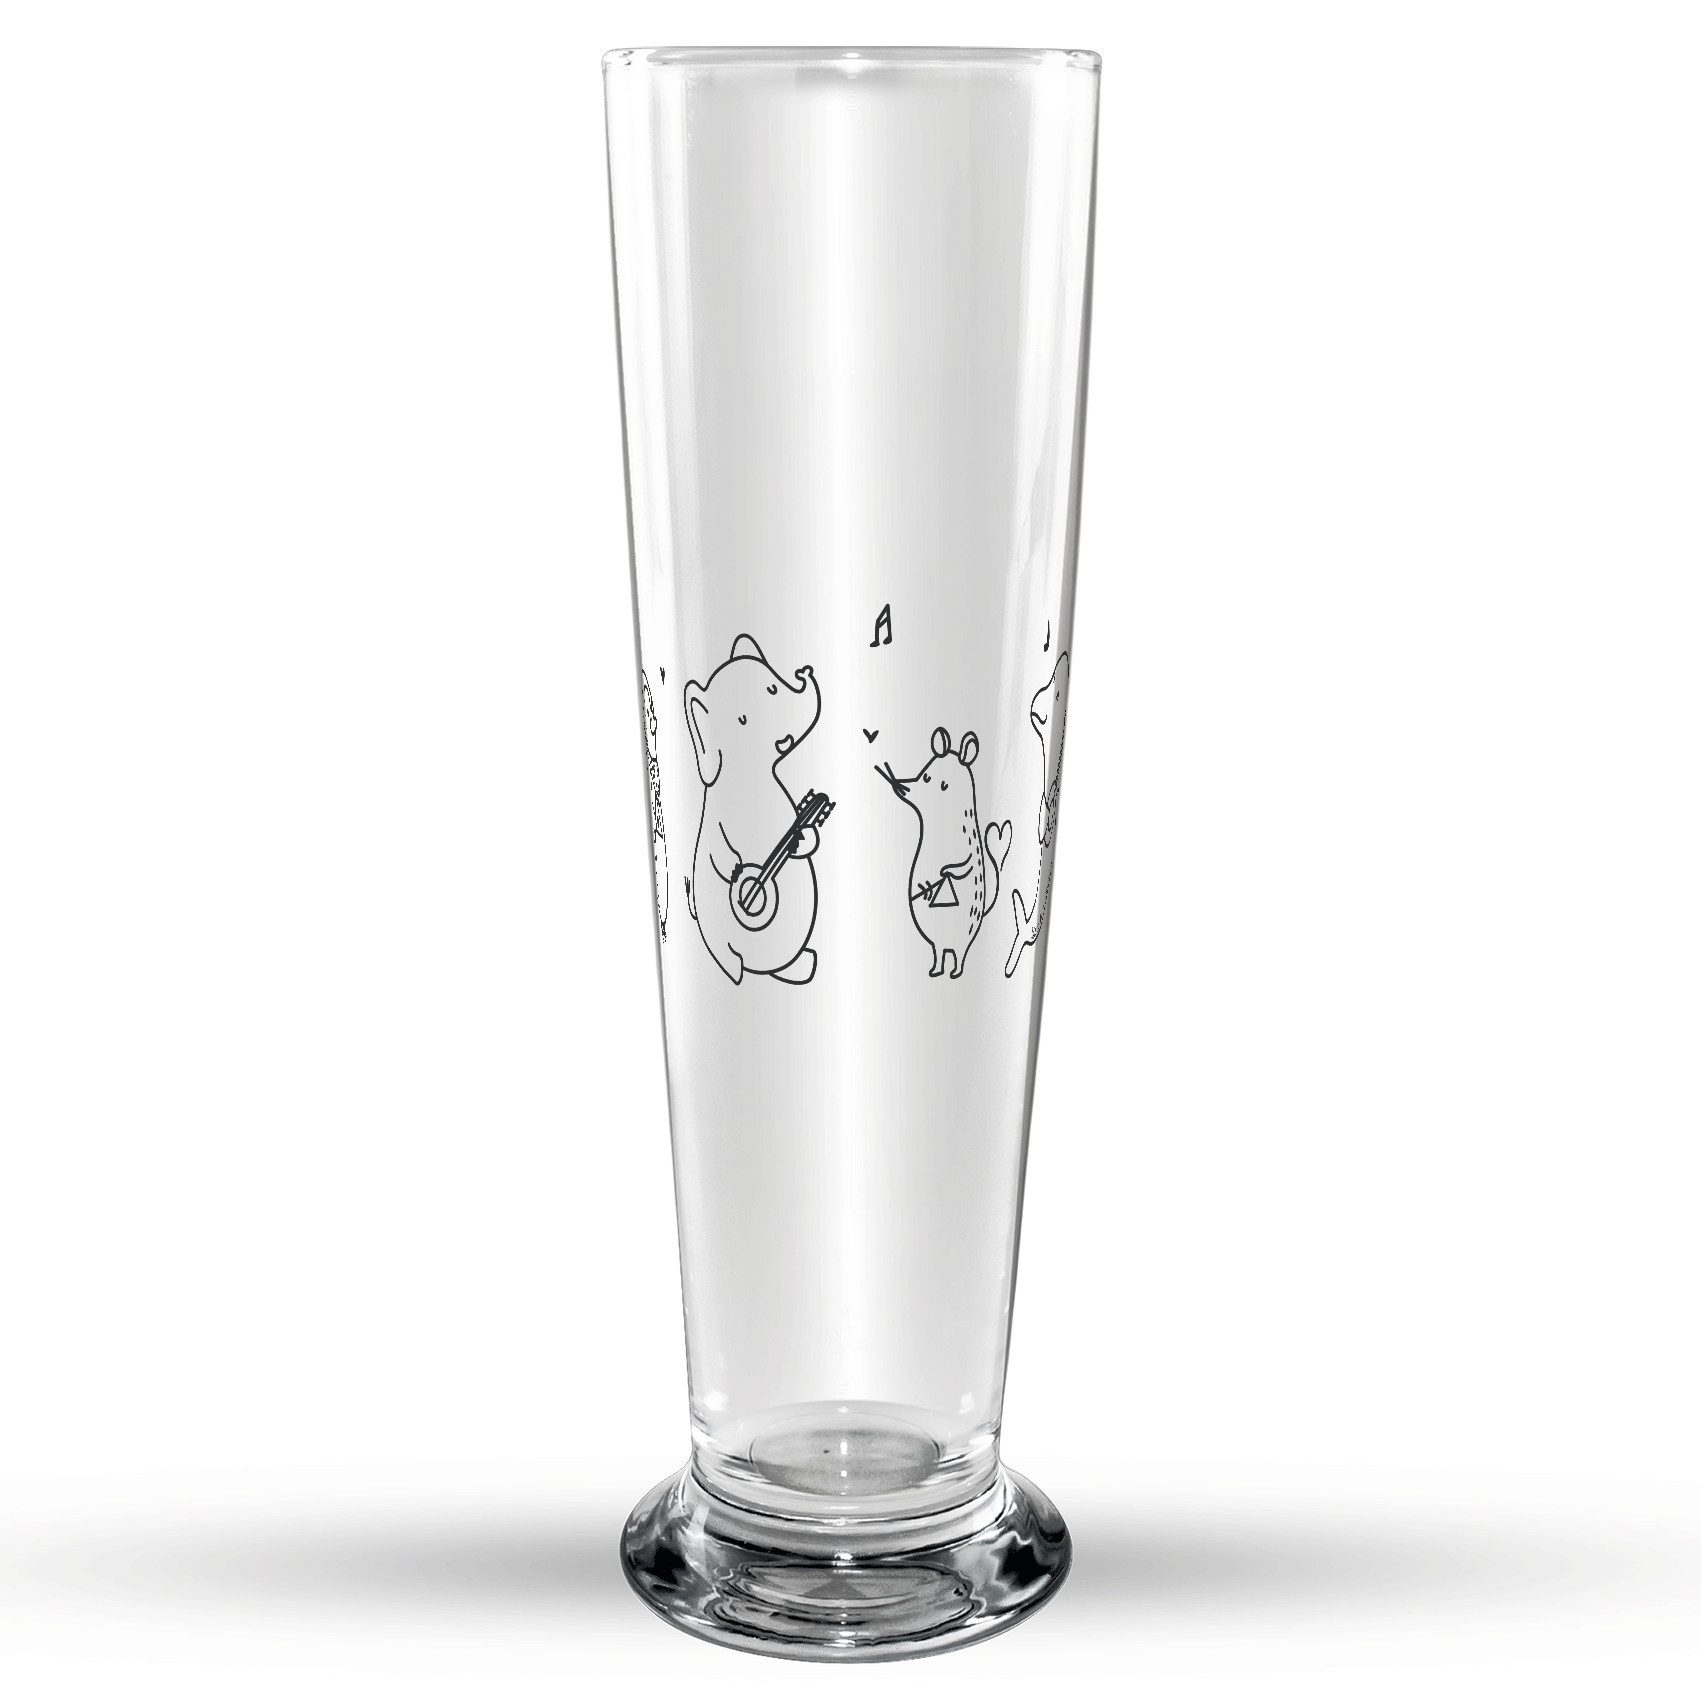 Mr. & Mrs. Panda Bierglas Big Band - Transparent - Geschenk, Vatertag, Bierkrug, Triangel, lust, Premium Glas, Elegantes Design